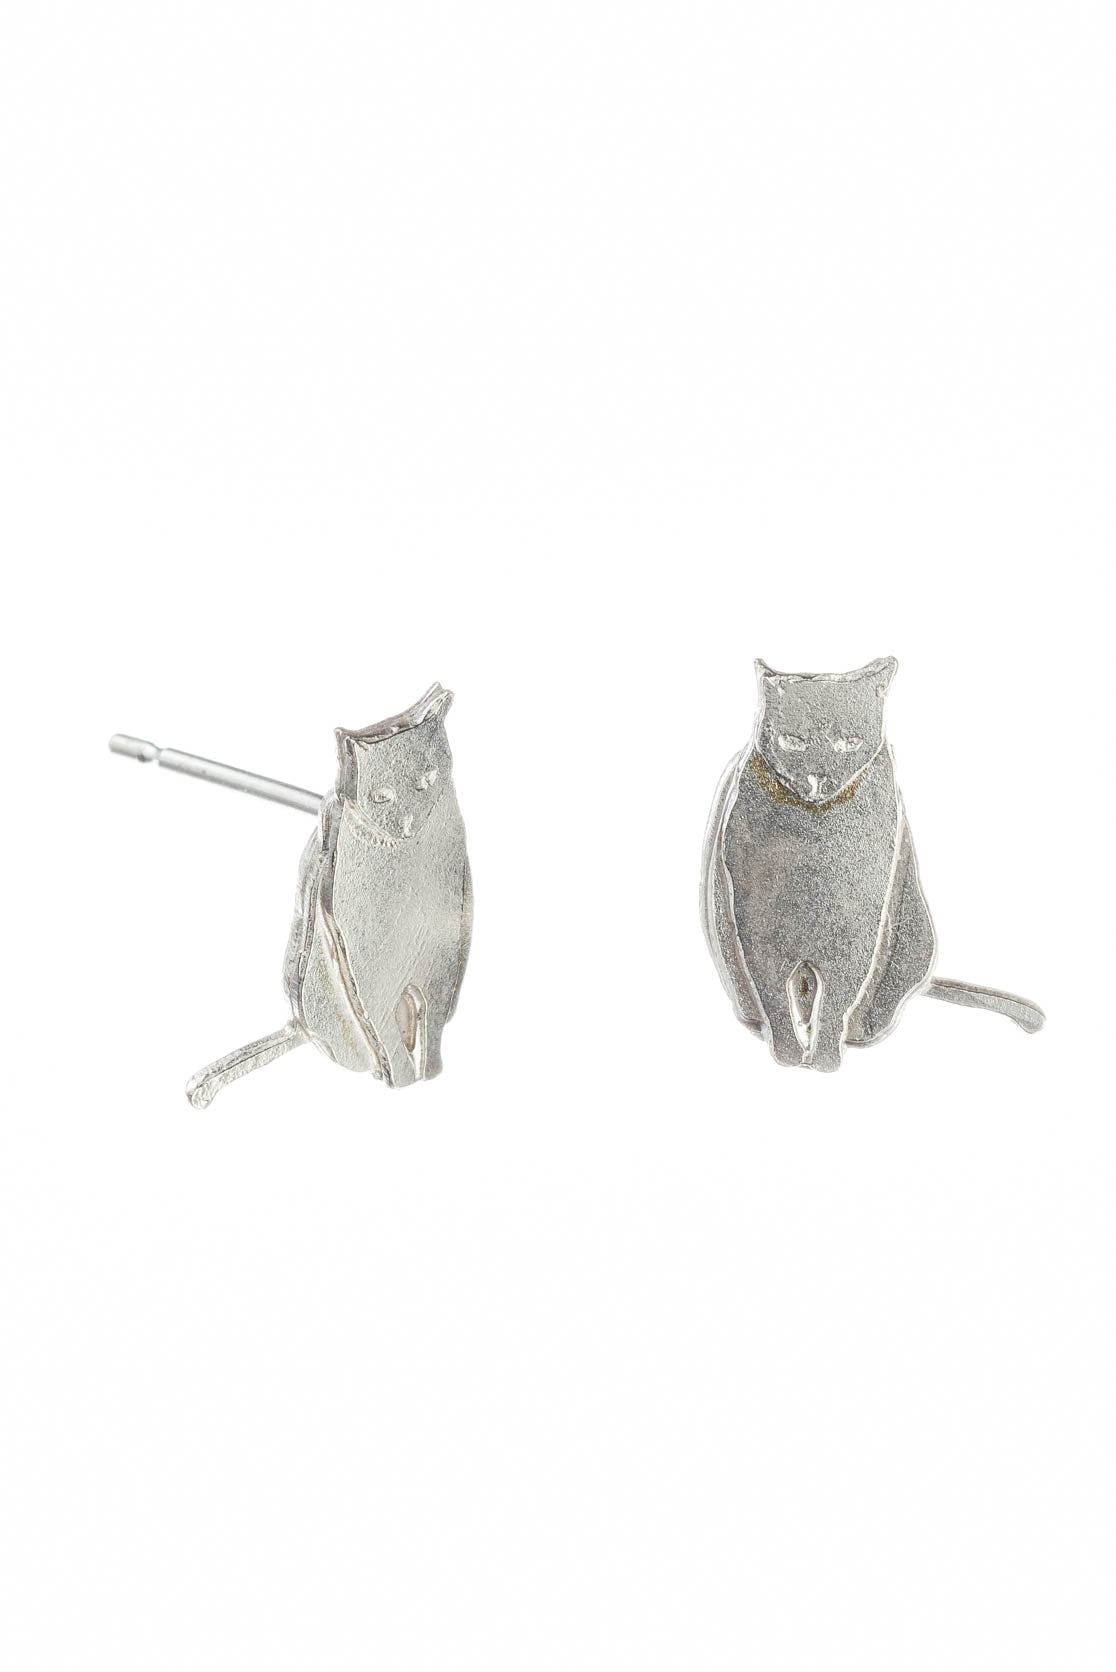 Sitting Cat Stud Earrings - Large In Silver, Goldplate or Black